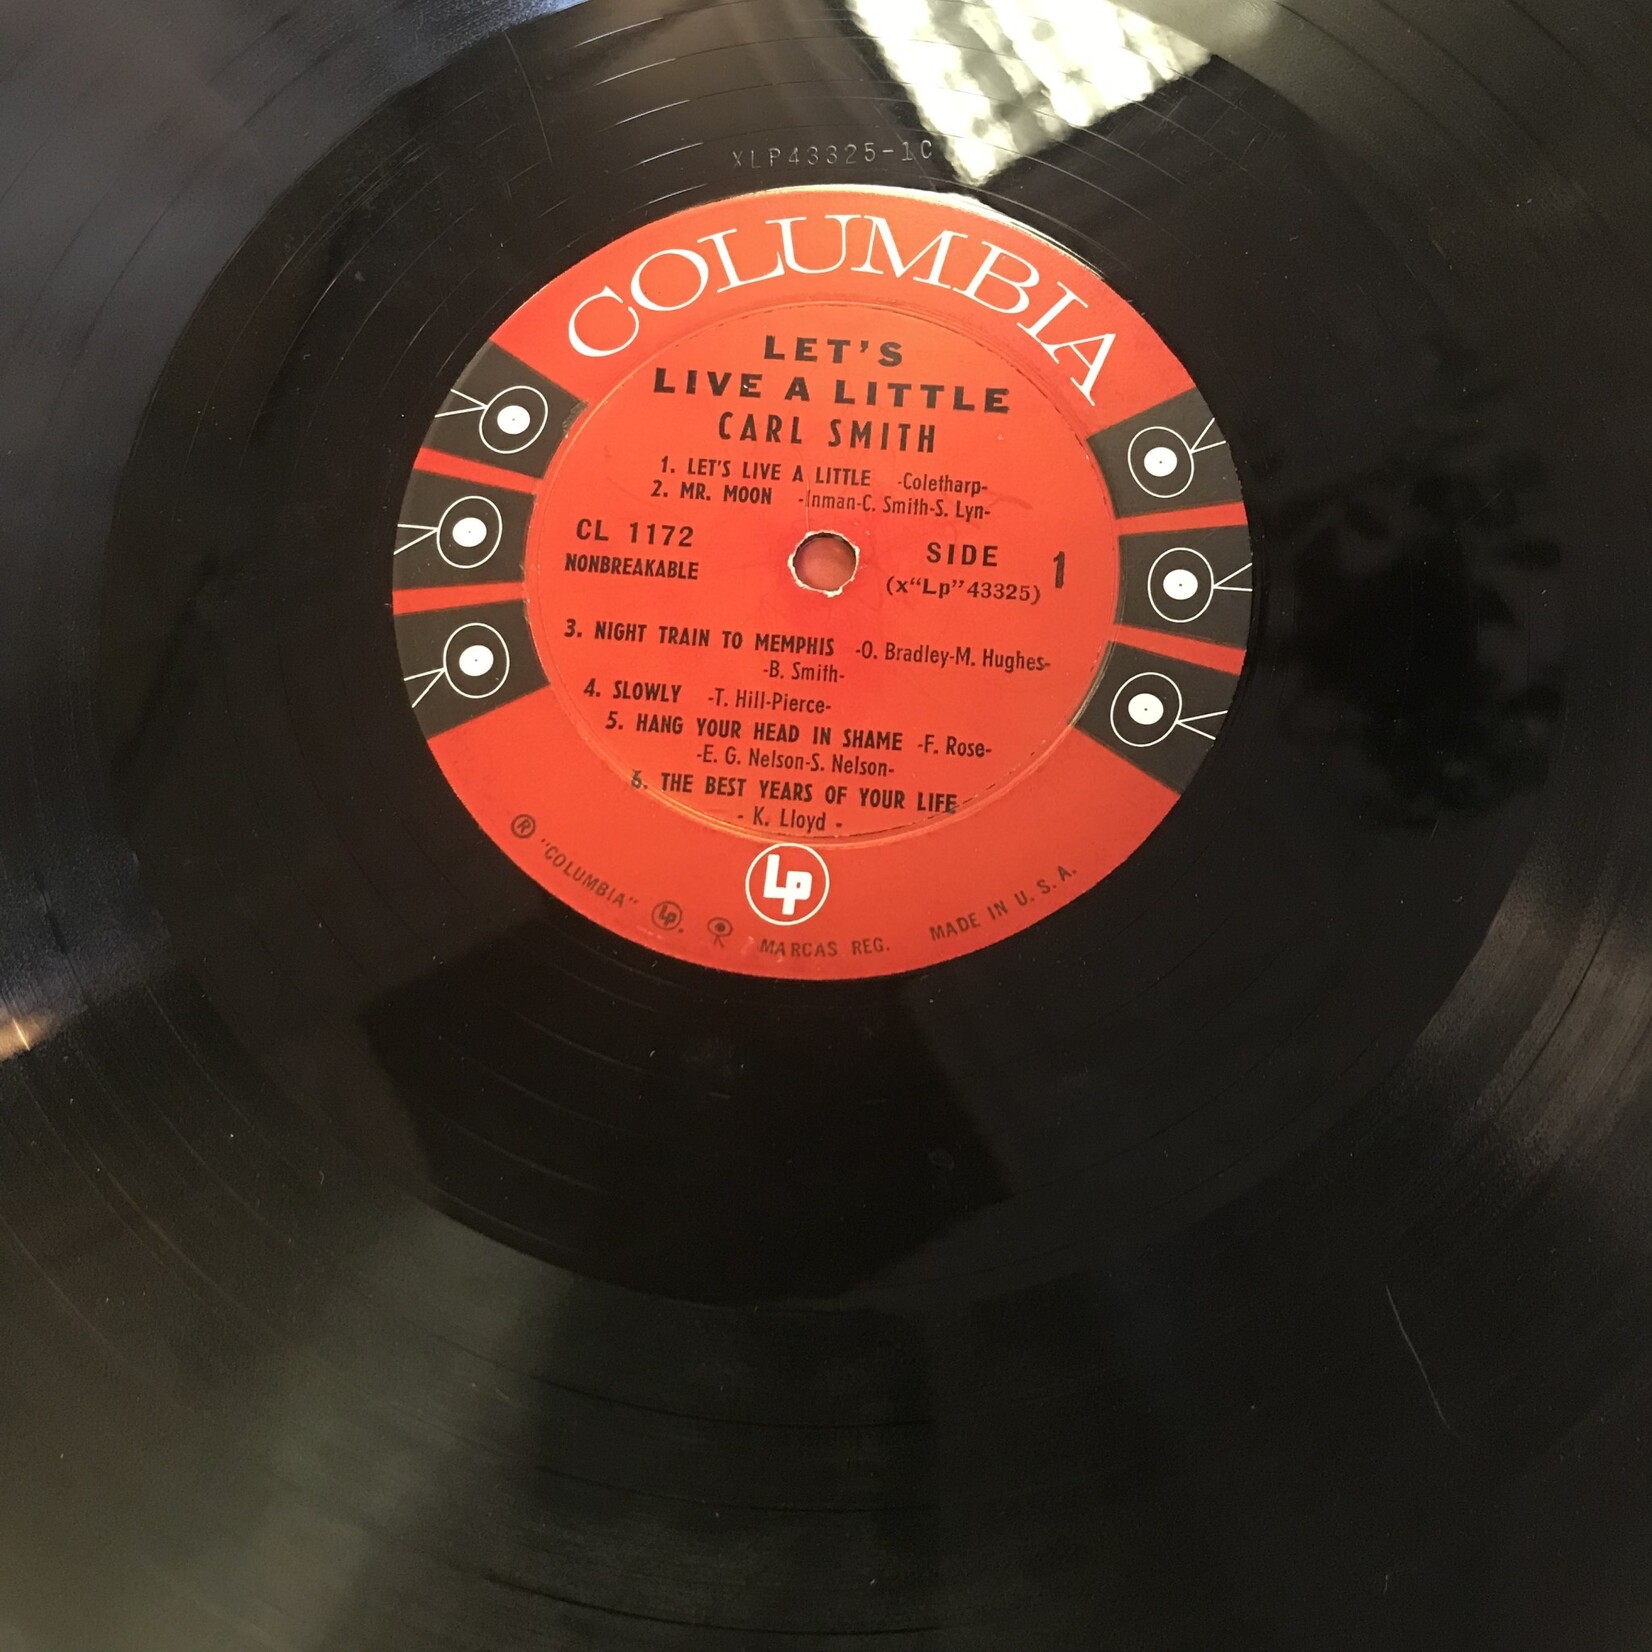 Carl Smith - Let’s Live A Little - CL1172 - Vinyl LP (USED)